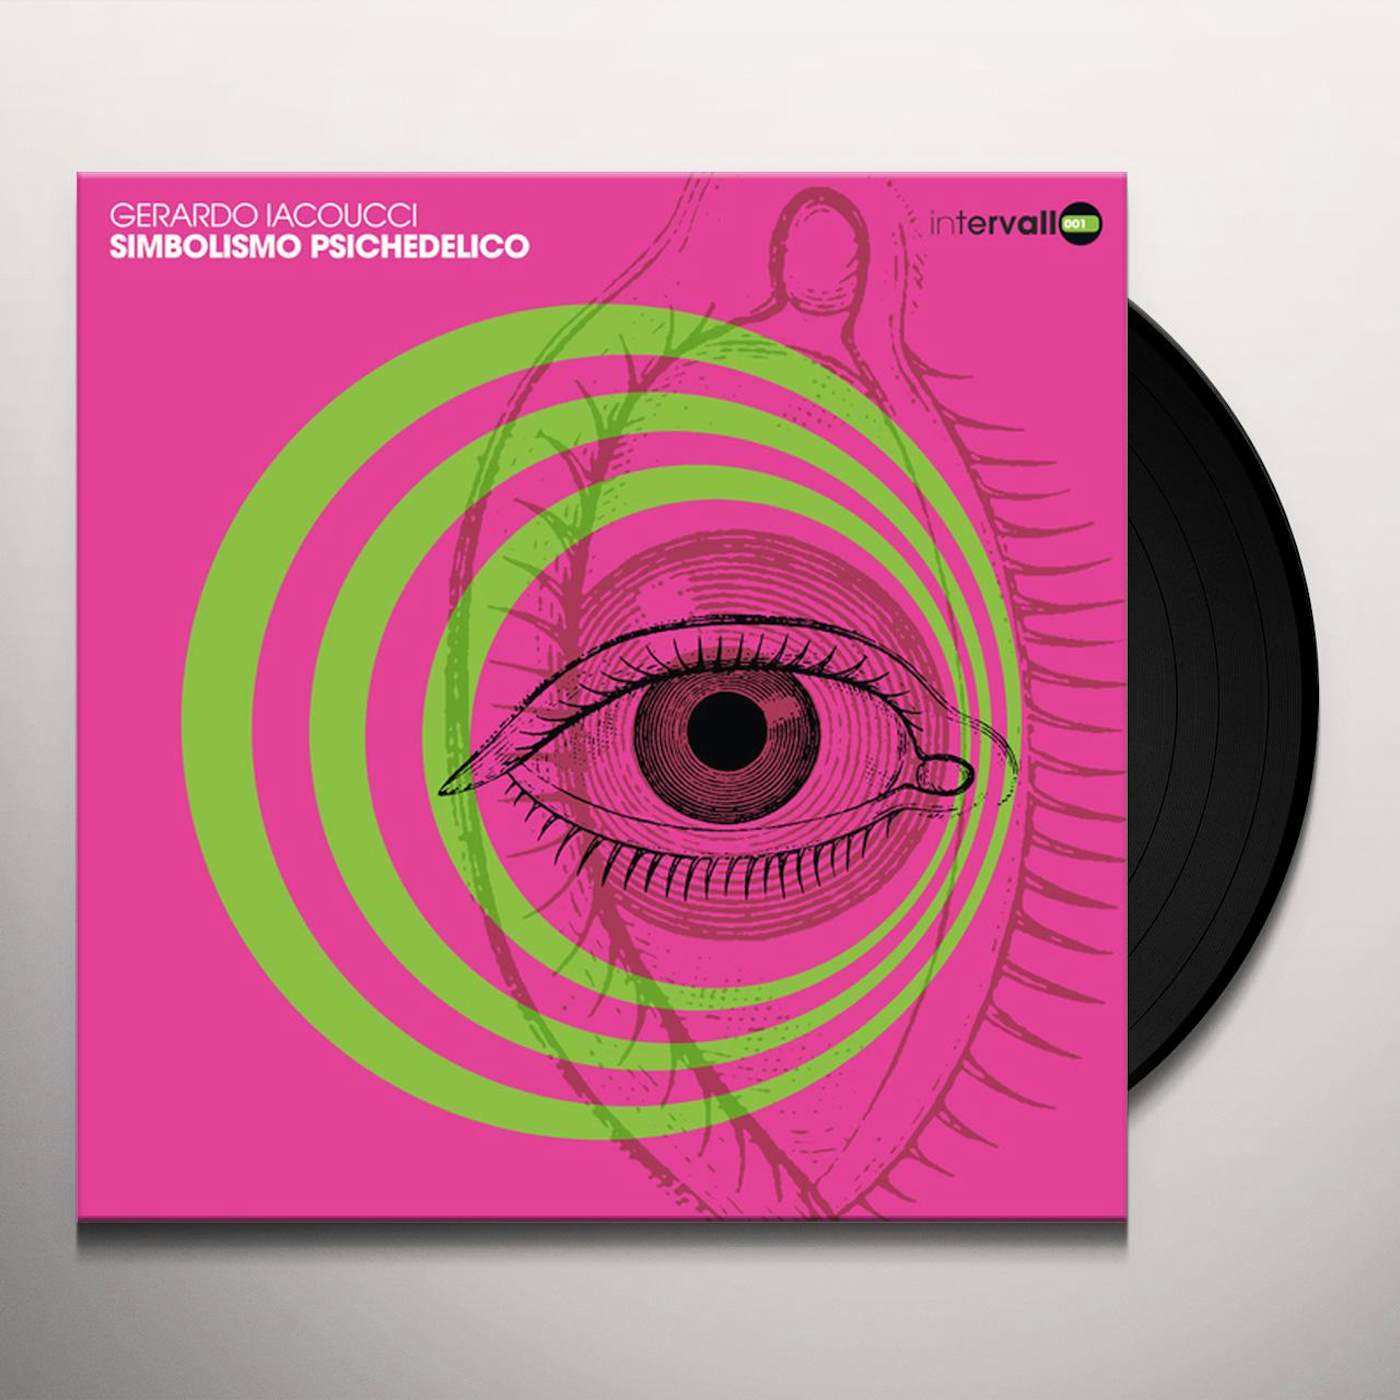 Gerardo Iacoucci Simbolismo Psichedelico Vinyl Record